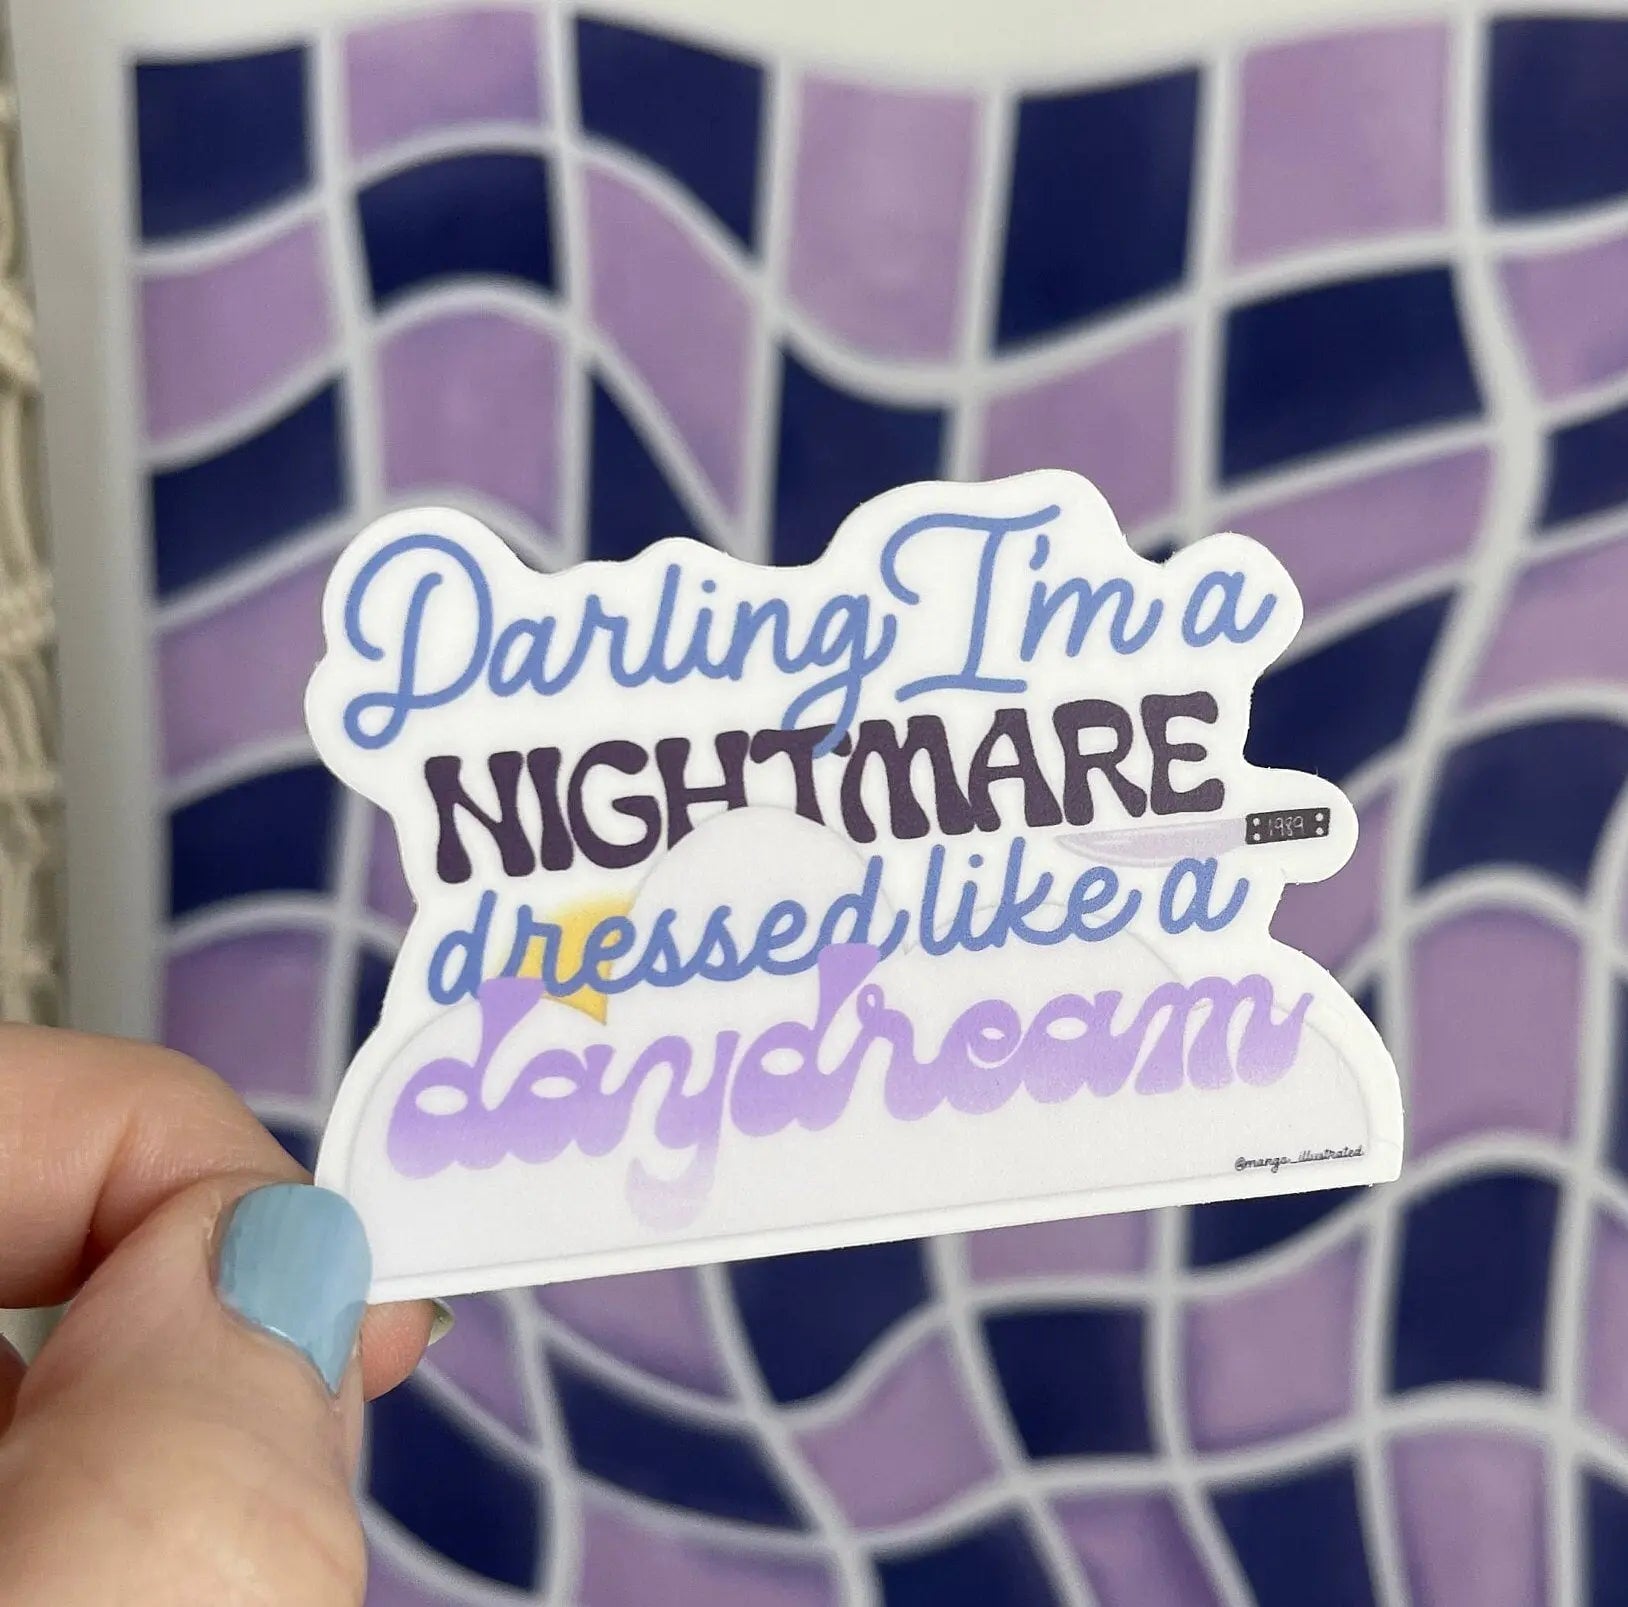 Darling I'm a nightmare dressed like a daydream sticker MangoIllustrated